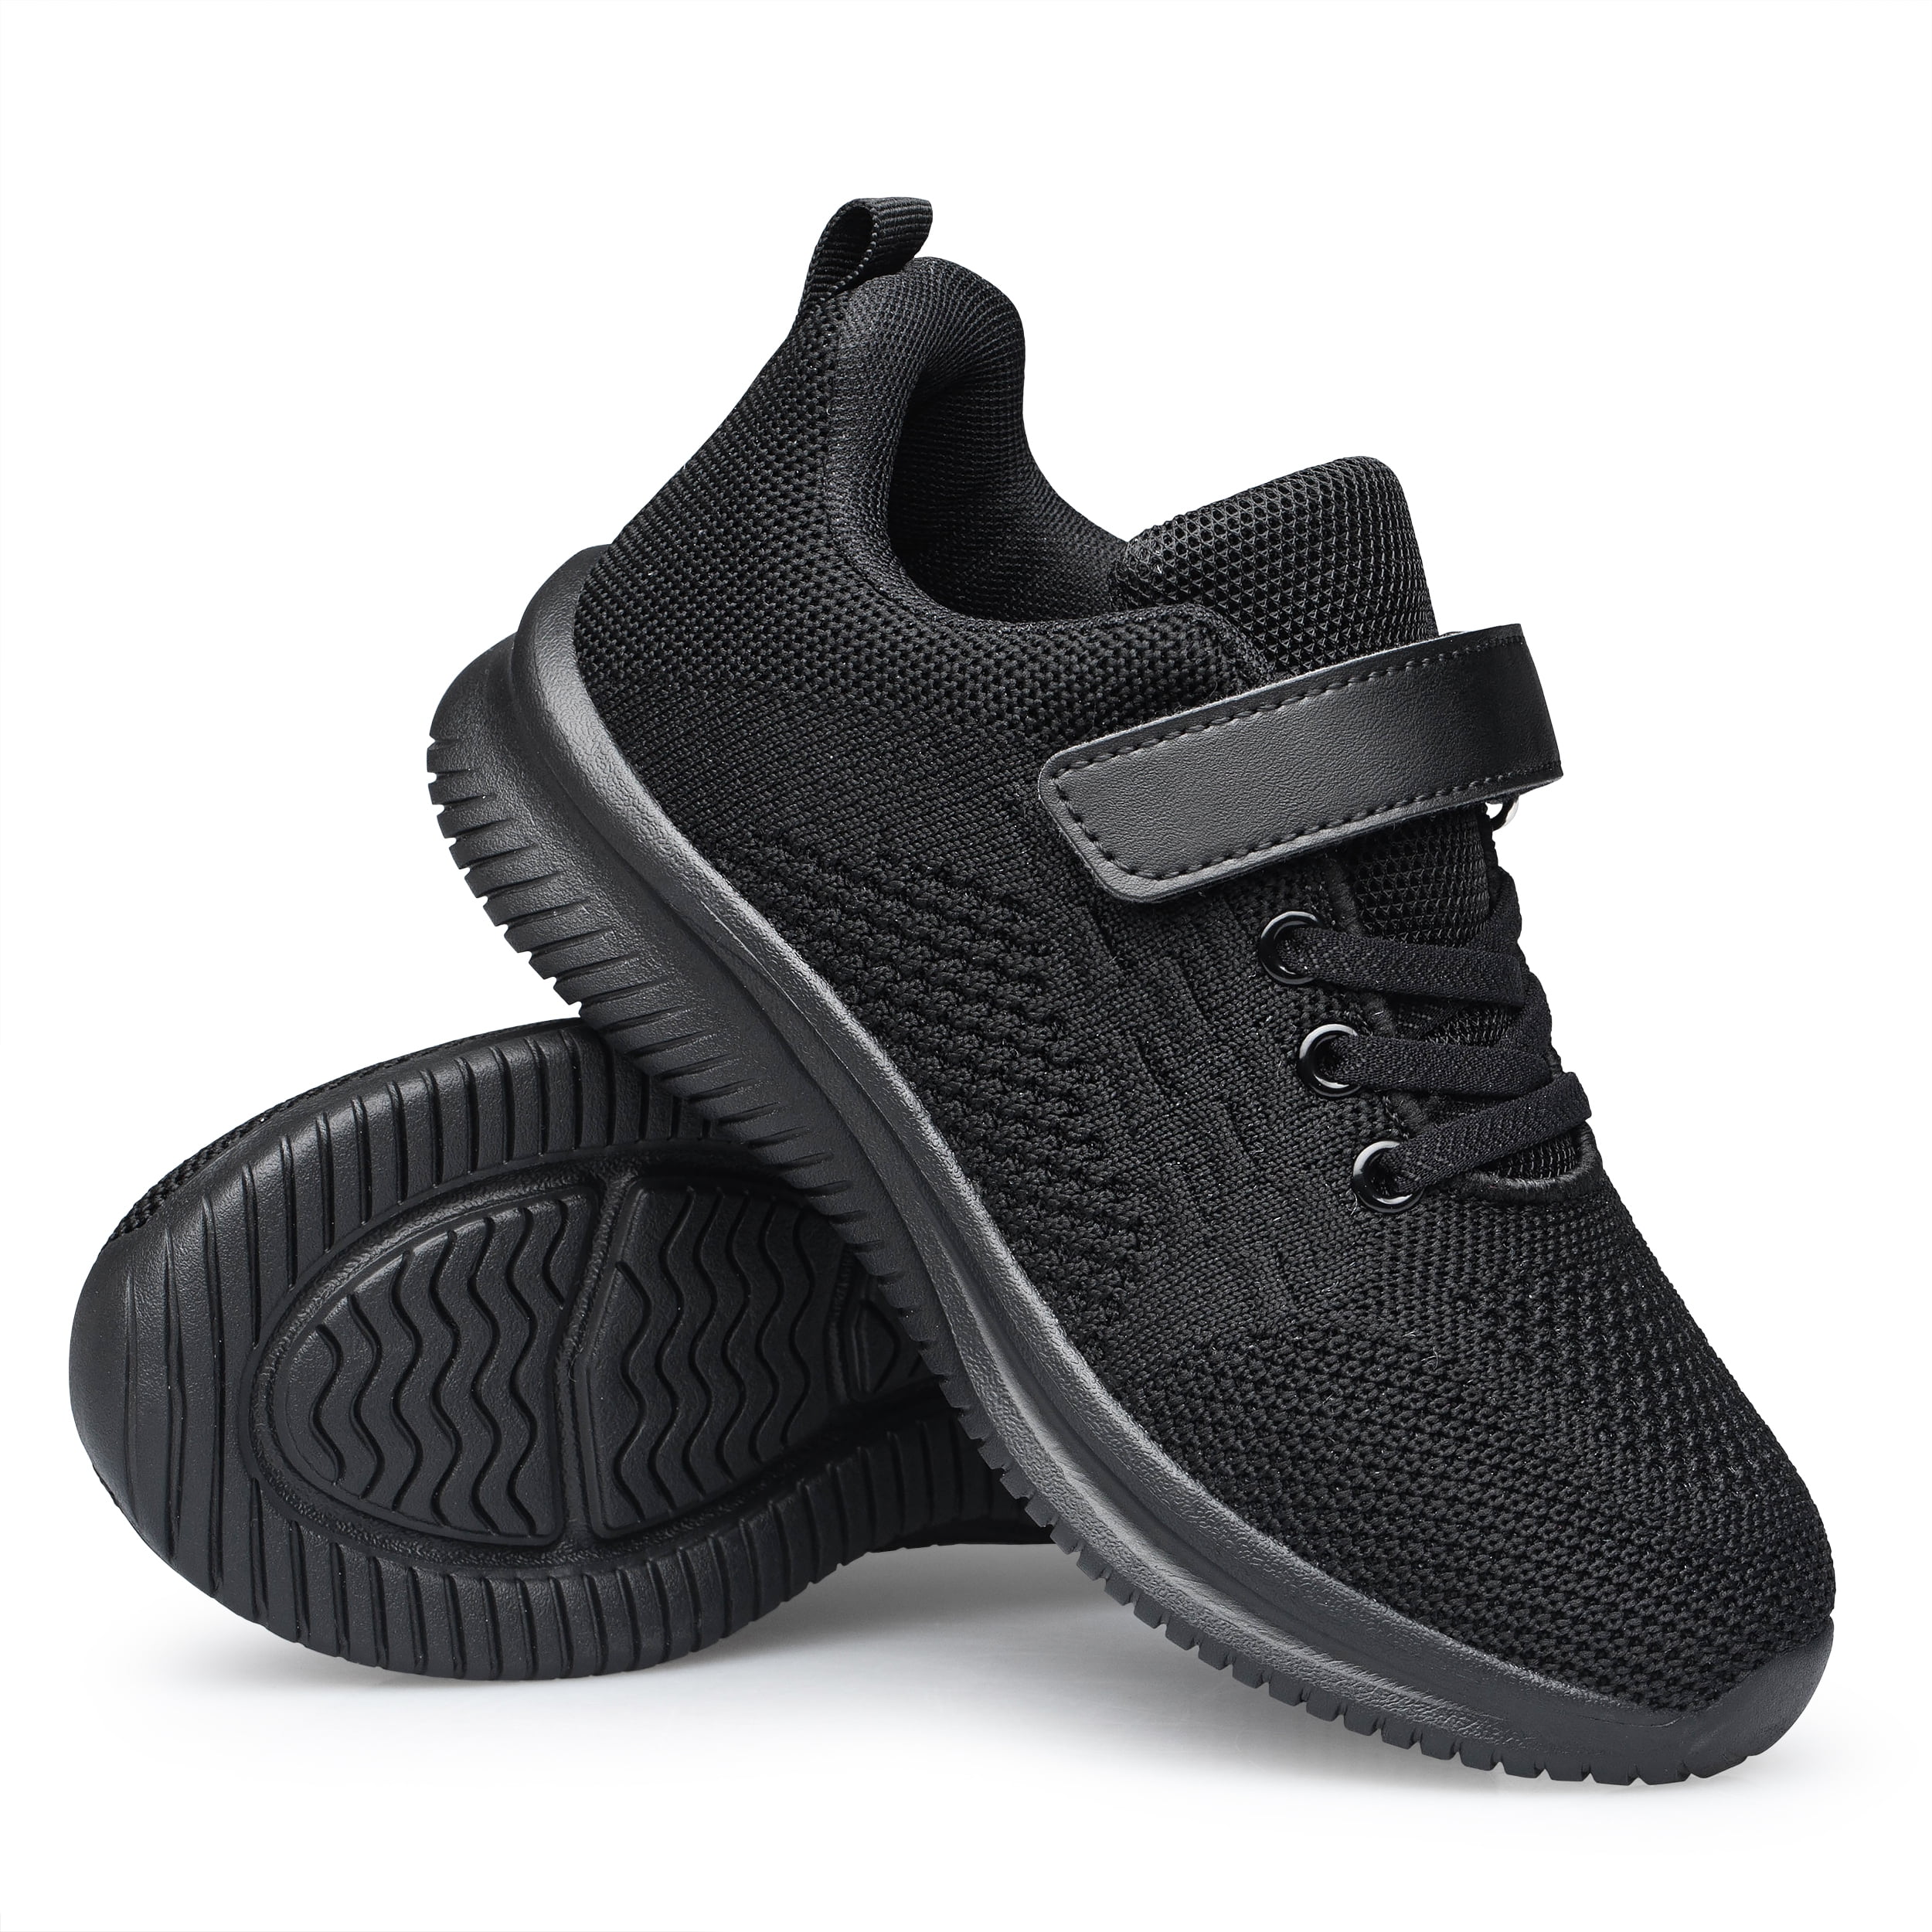  Munich Kids Fitness Shoes, Black Black 302, 4.5 US Unisex  Toddler